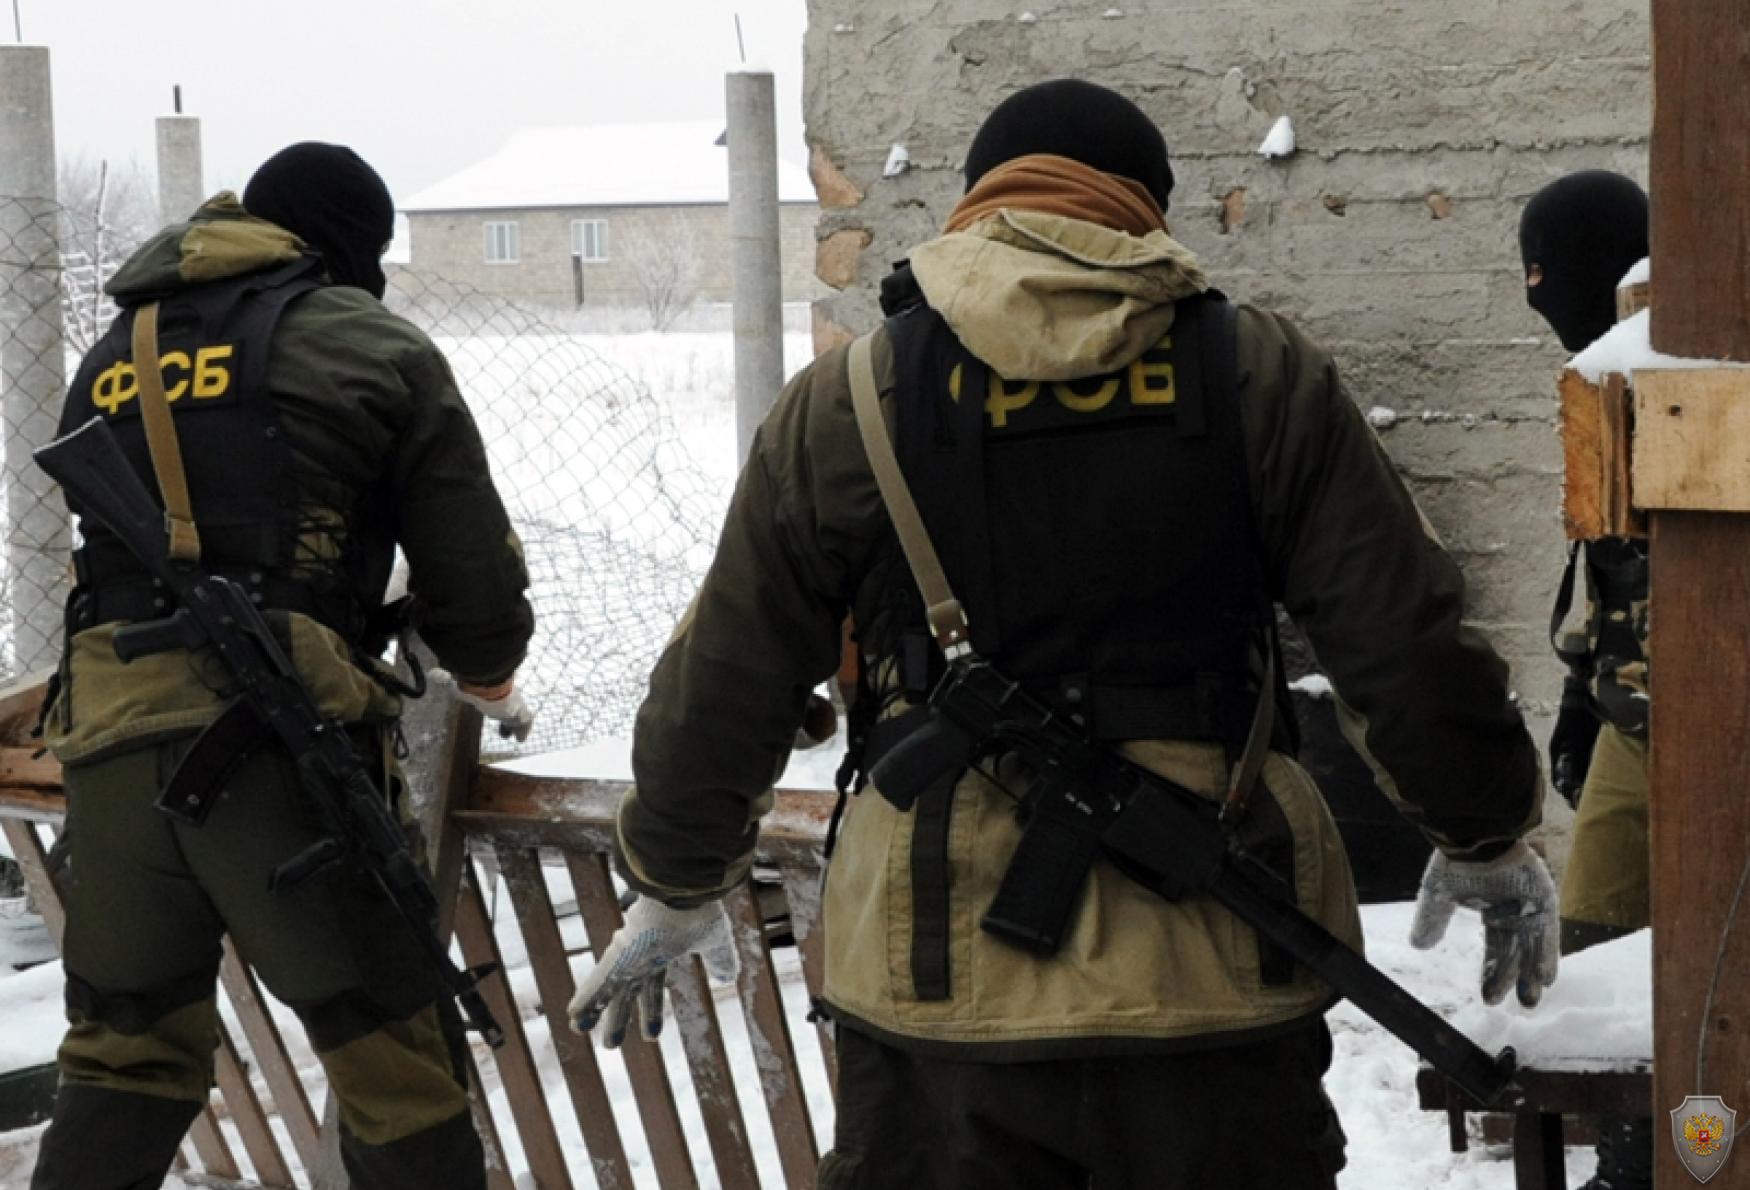 В КБР уничтожен бандитский тайник с боеприпасами, в Дагестане обезврежено СВУ